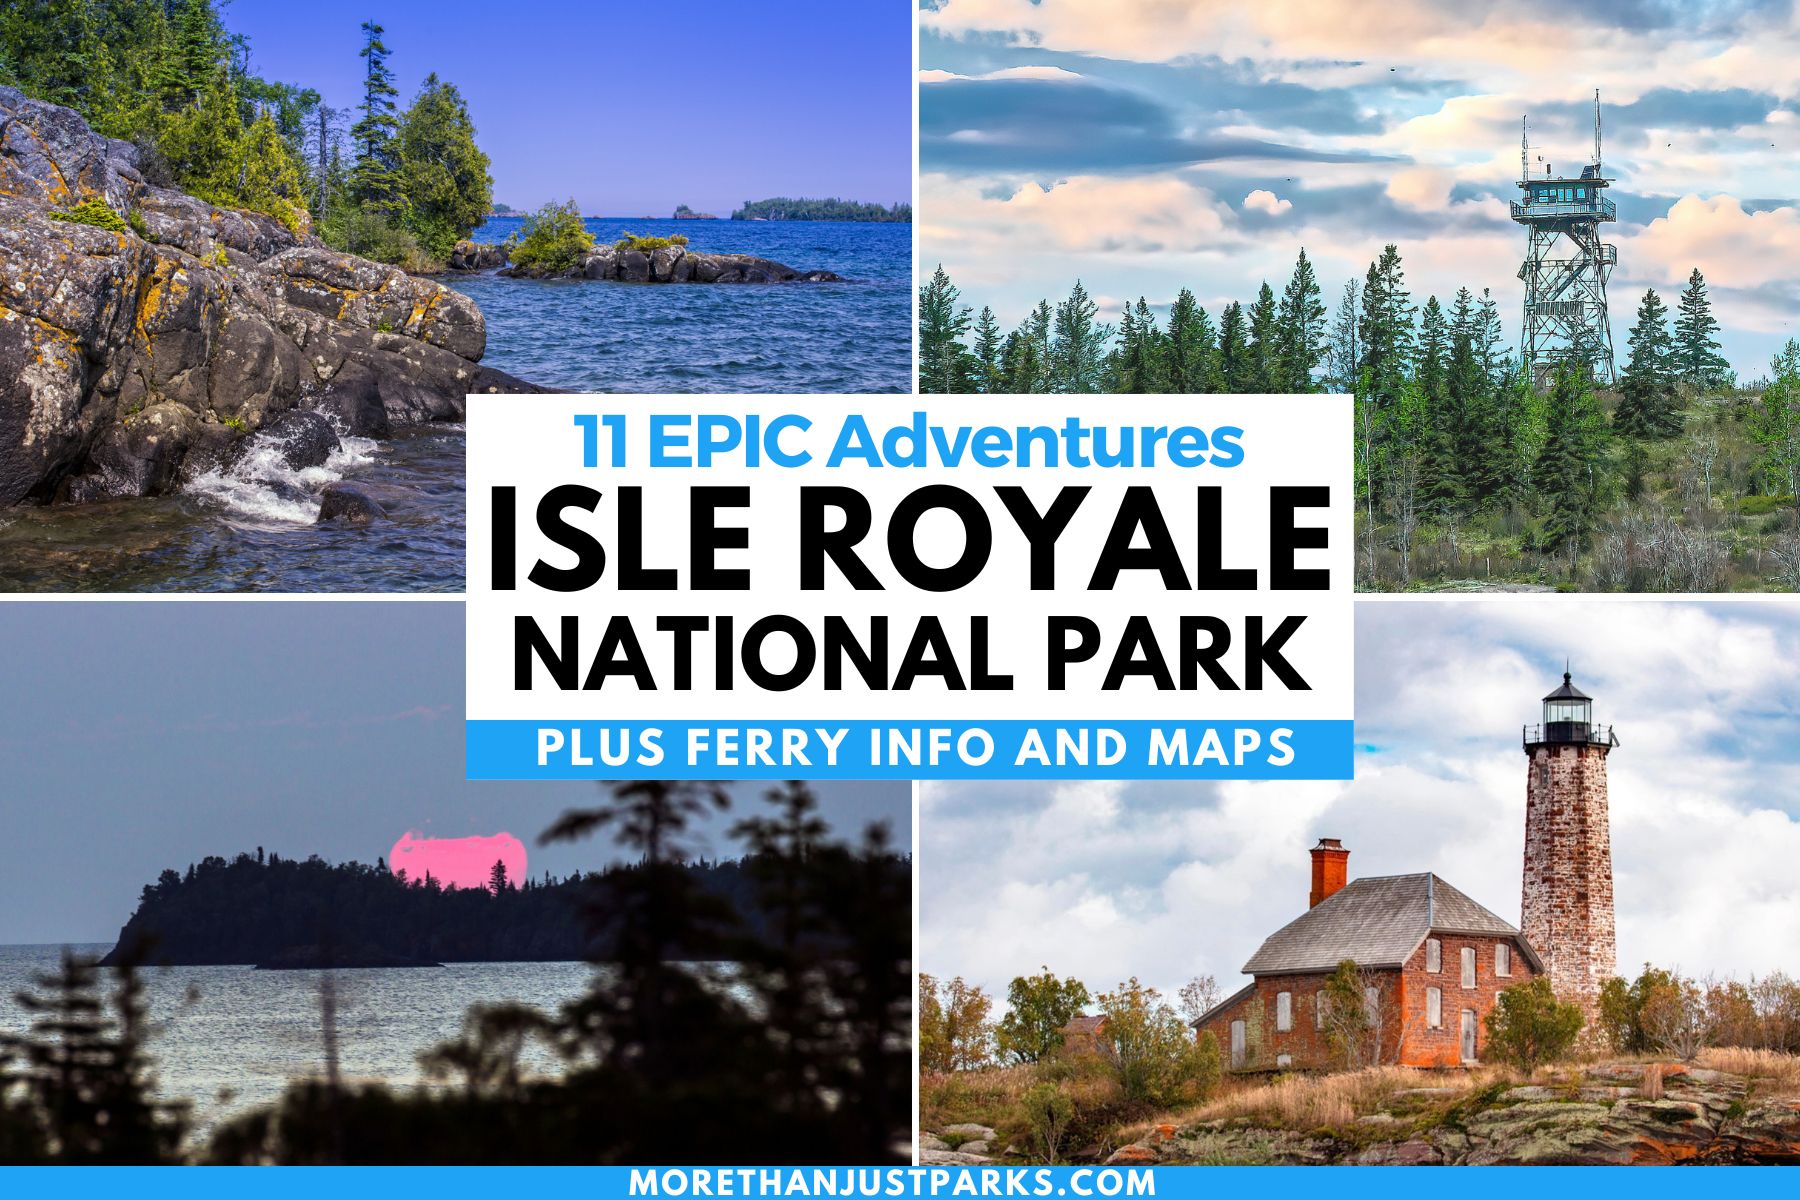 11 Epic Adventures Isle Royale National Park graphic